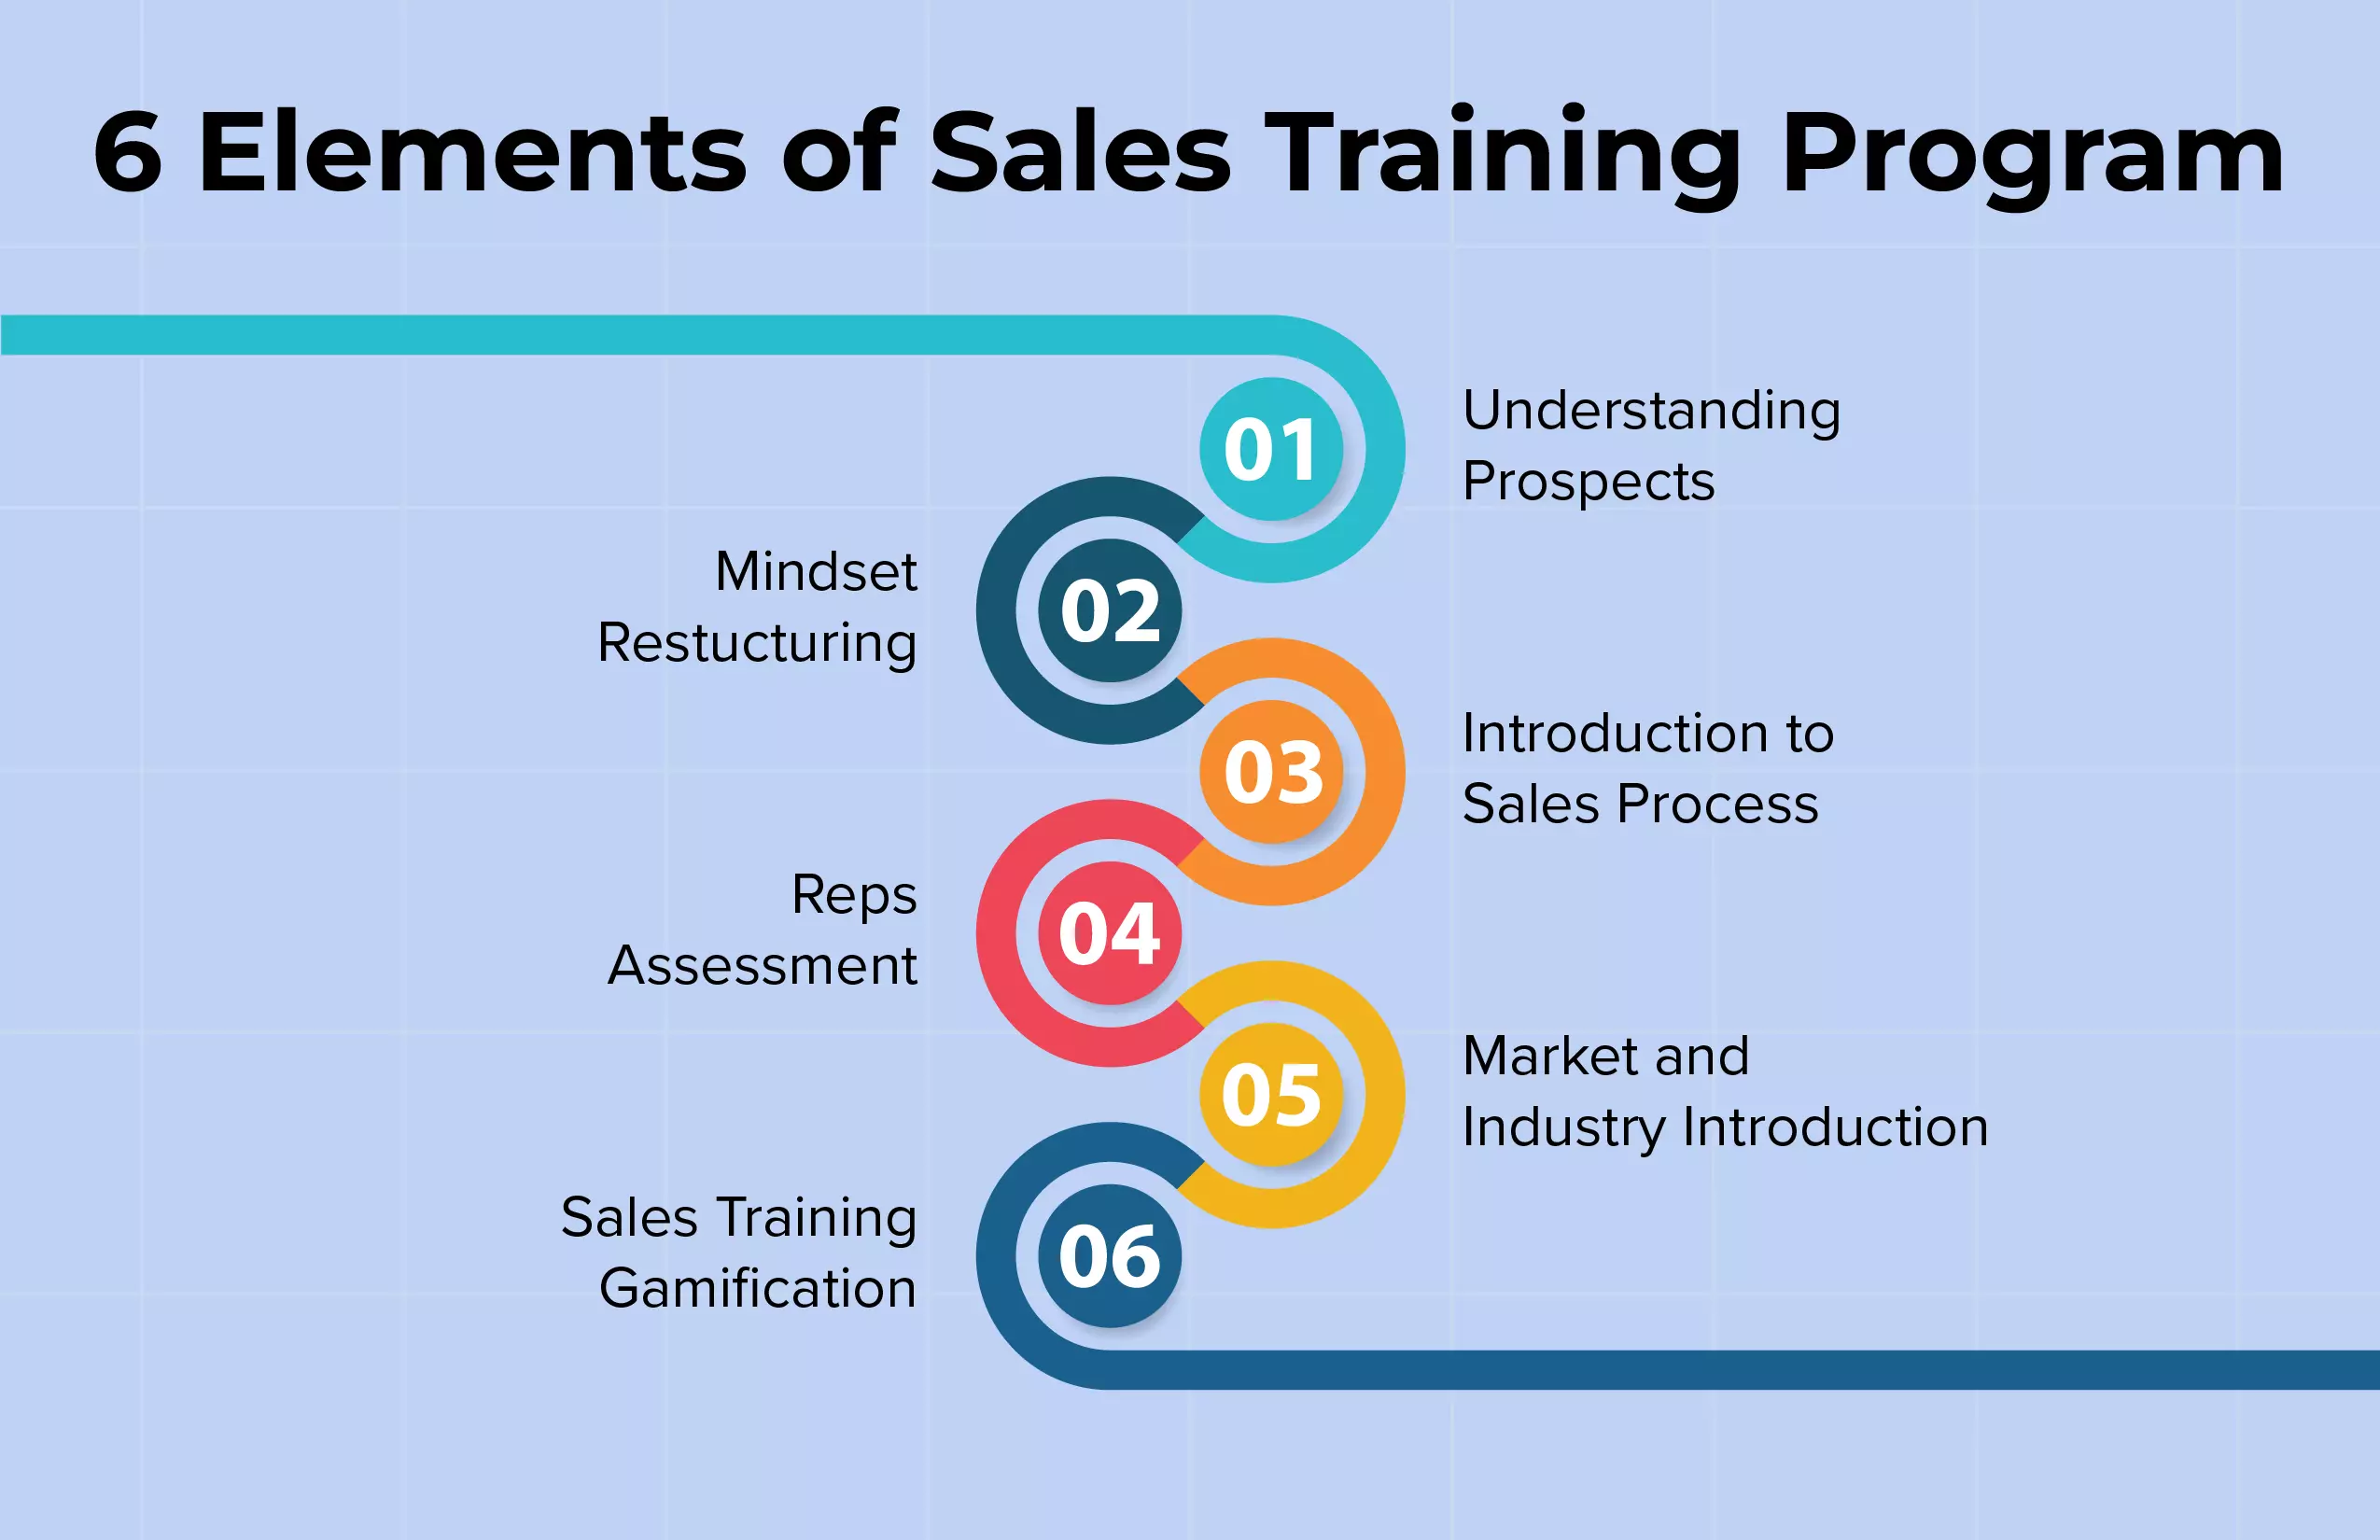 Sales & Marketing Career Development Program